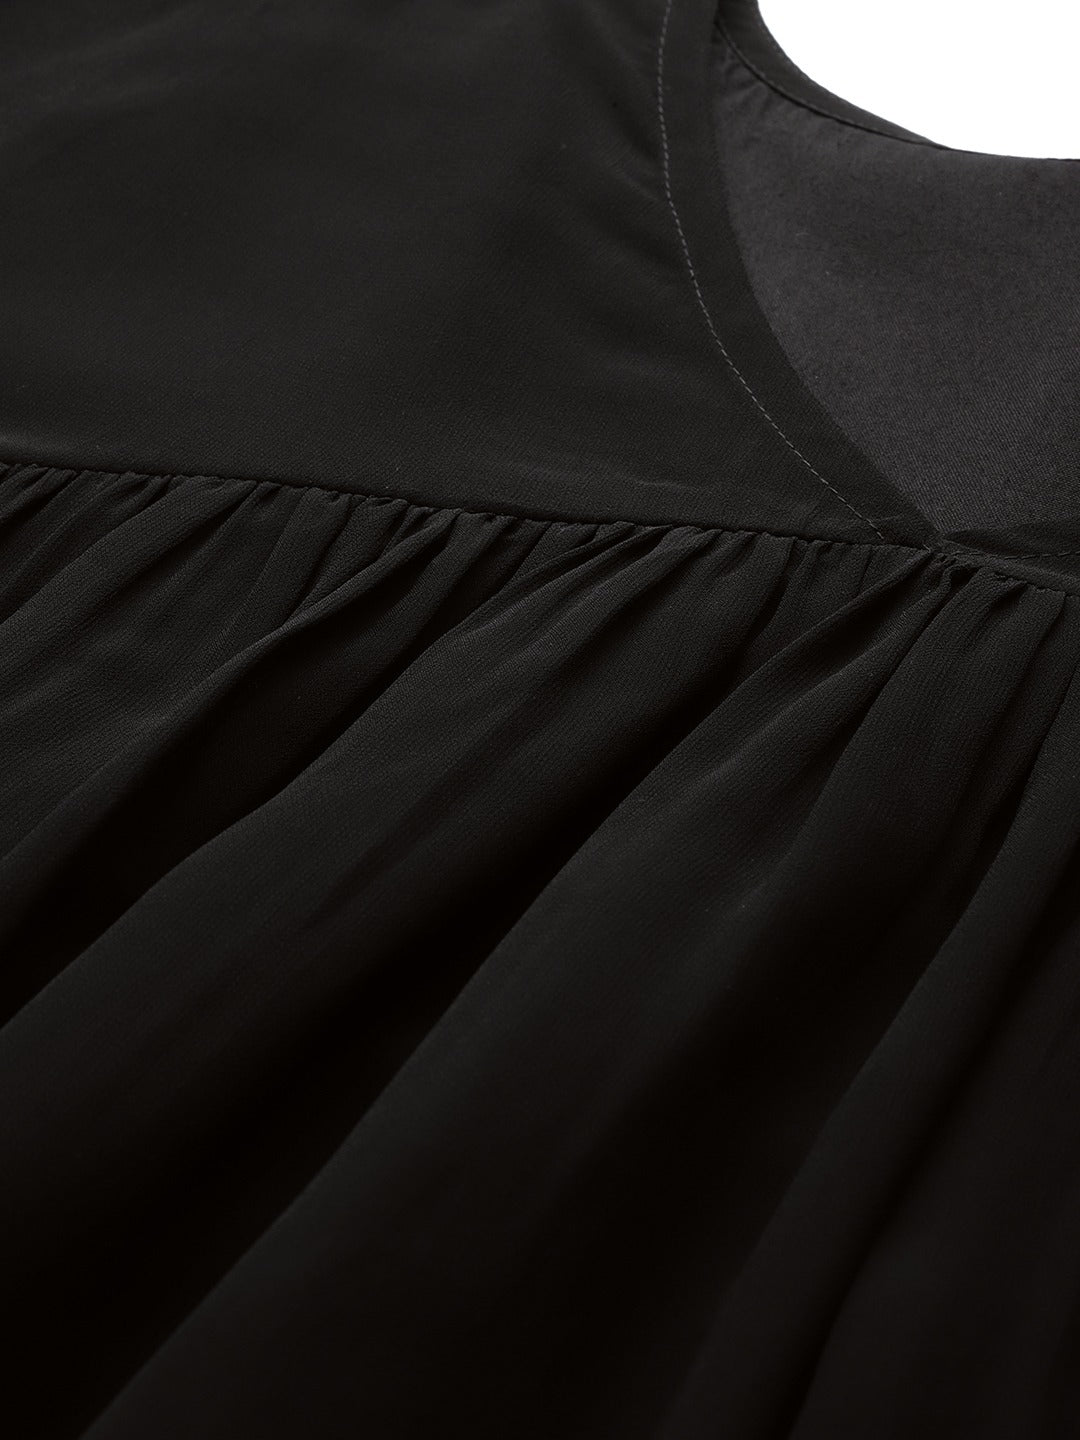 Cottinfab Black Solid High-Low Maxi Dress